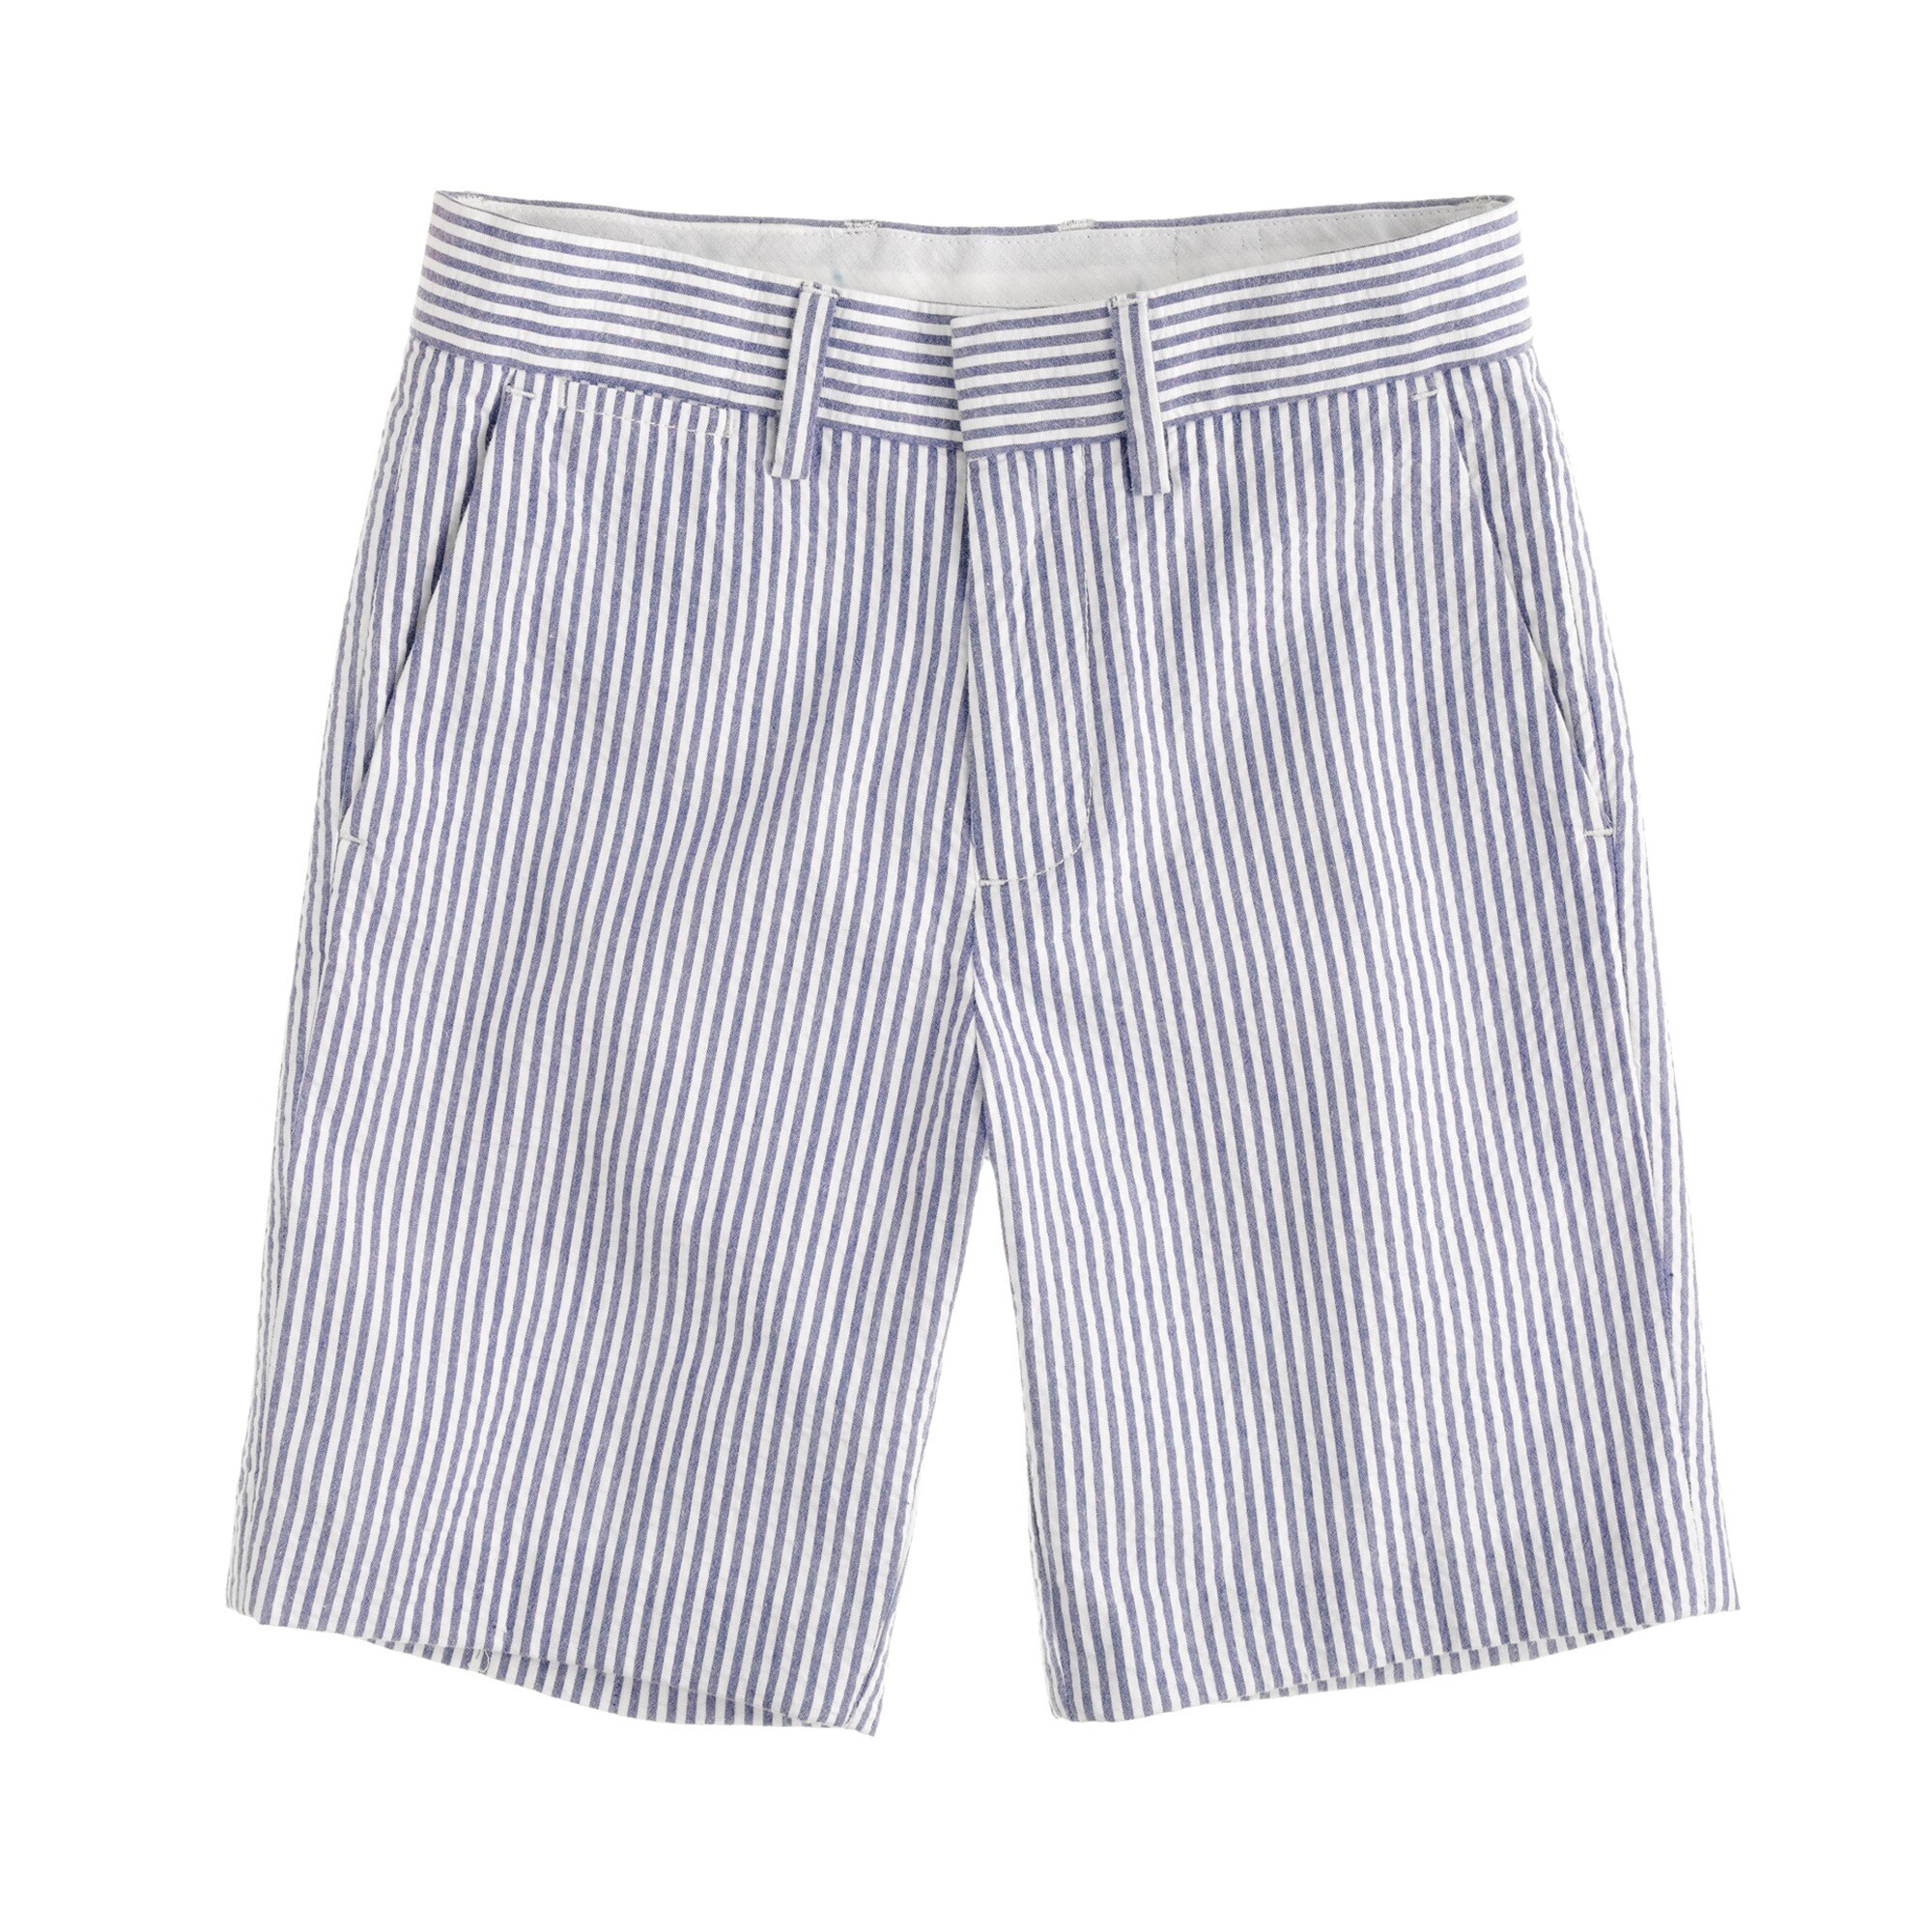 Boys' club short in wide-stripe seersucker : Boy club shorts | J.Crew